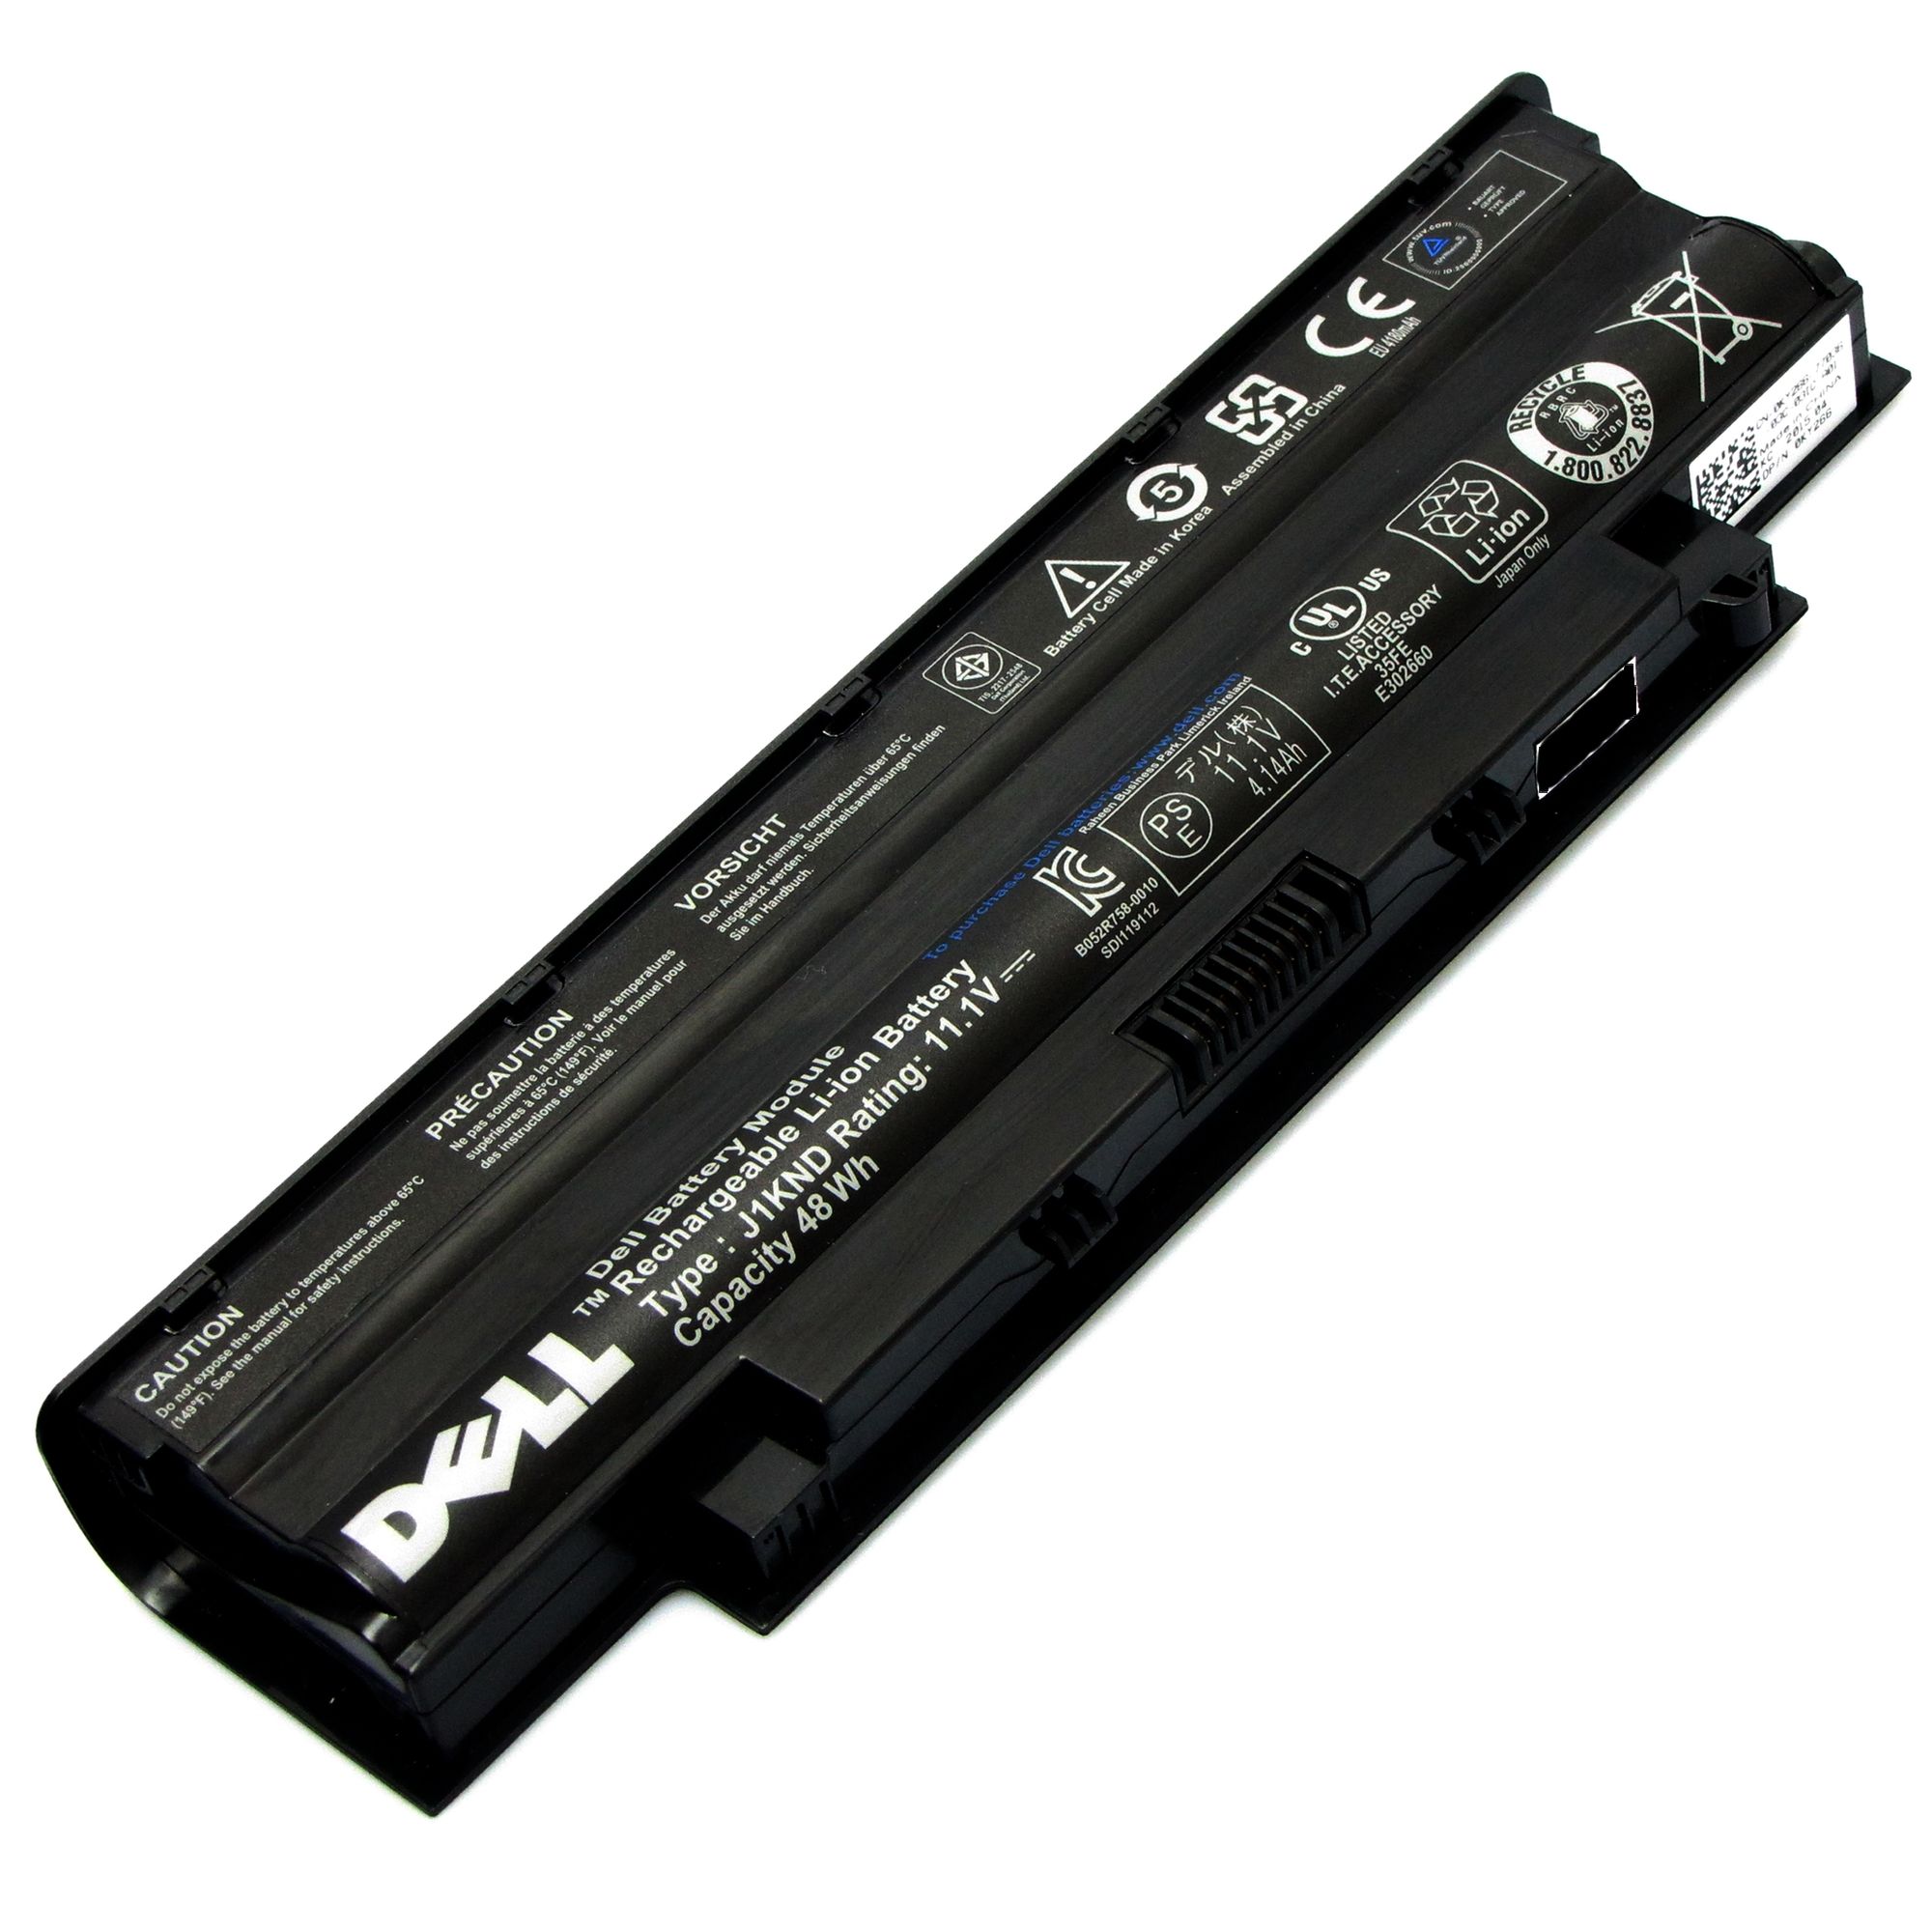 Dell battery